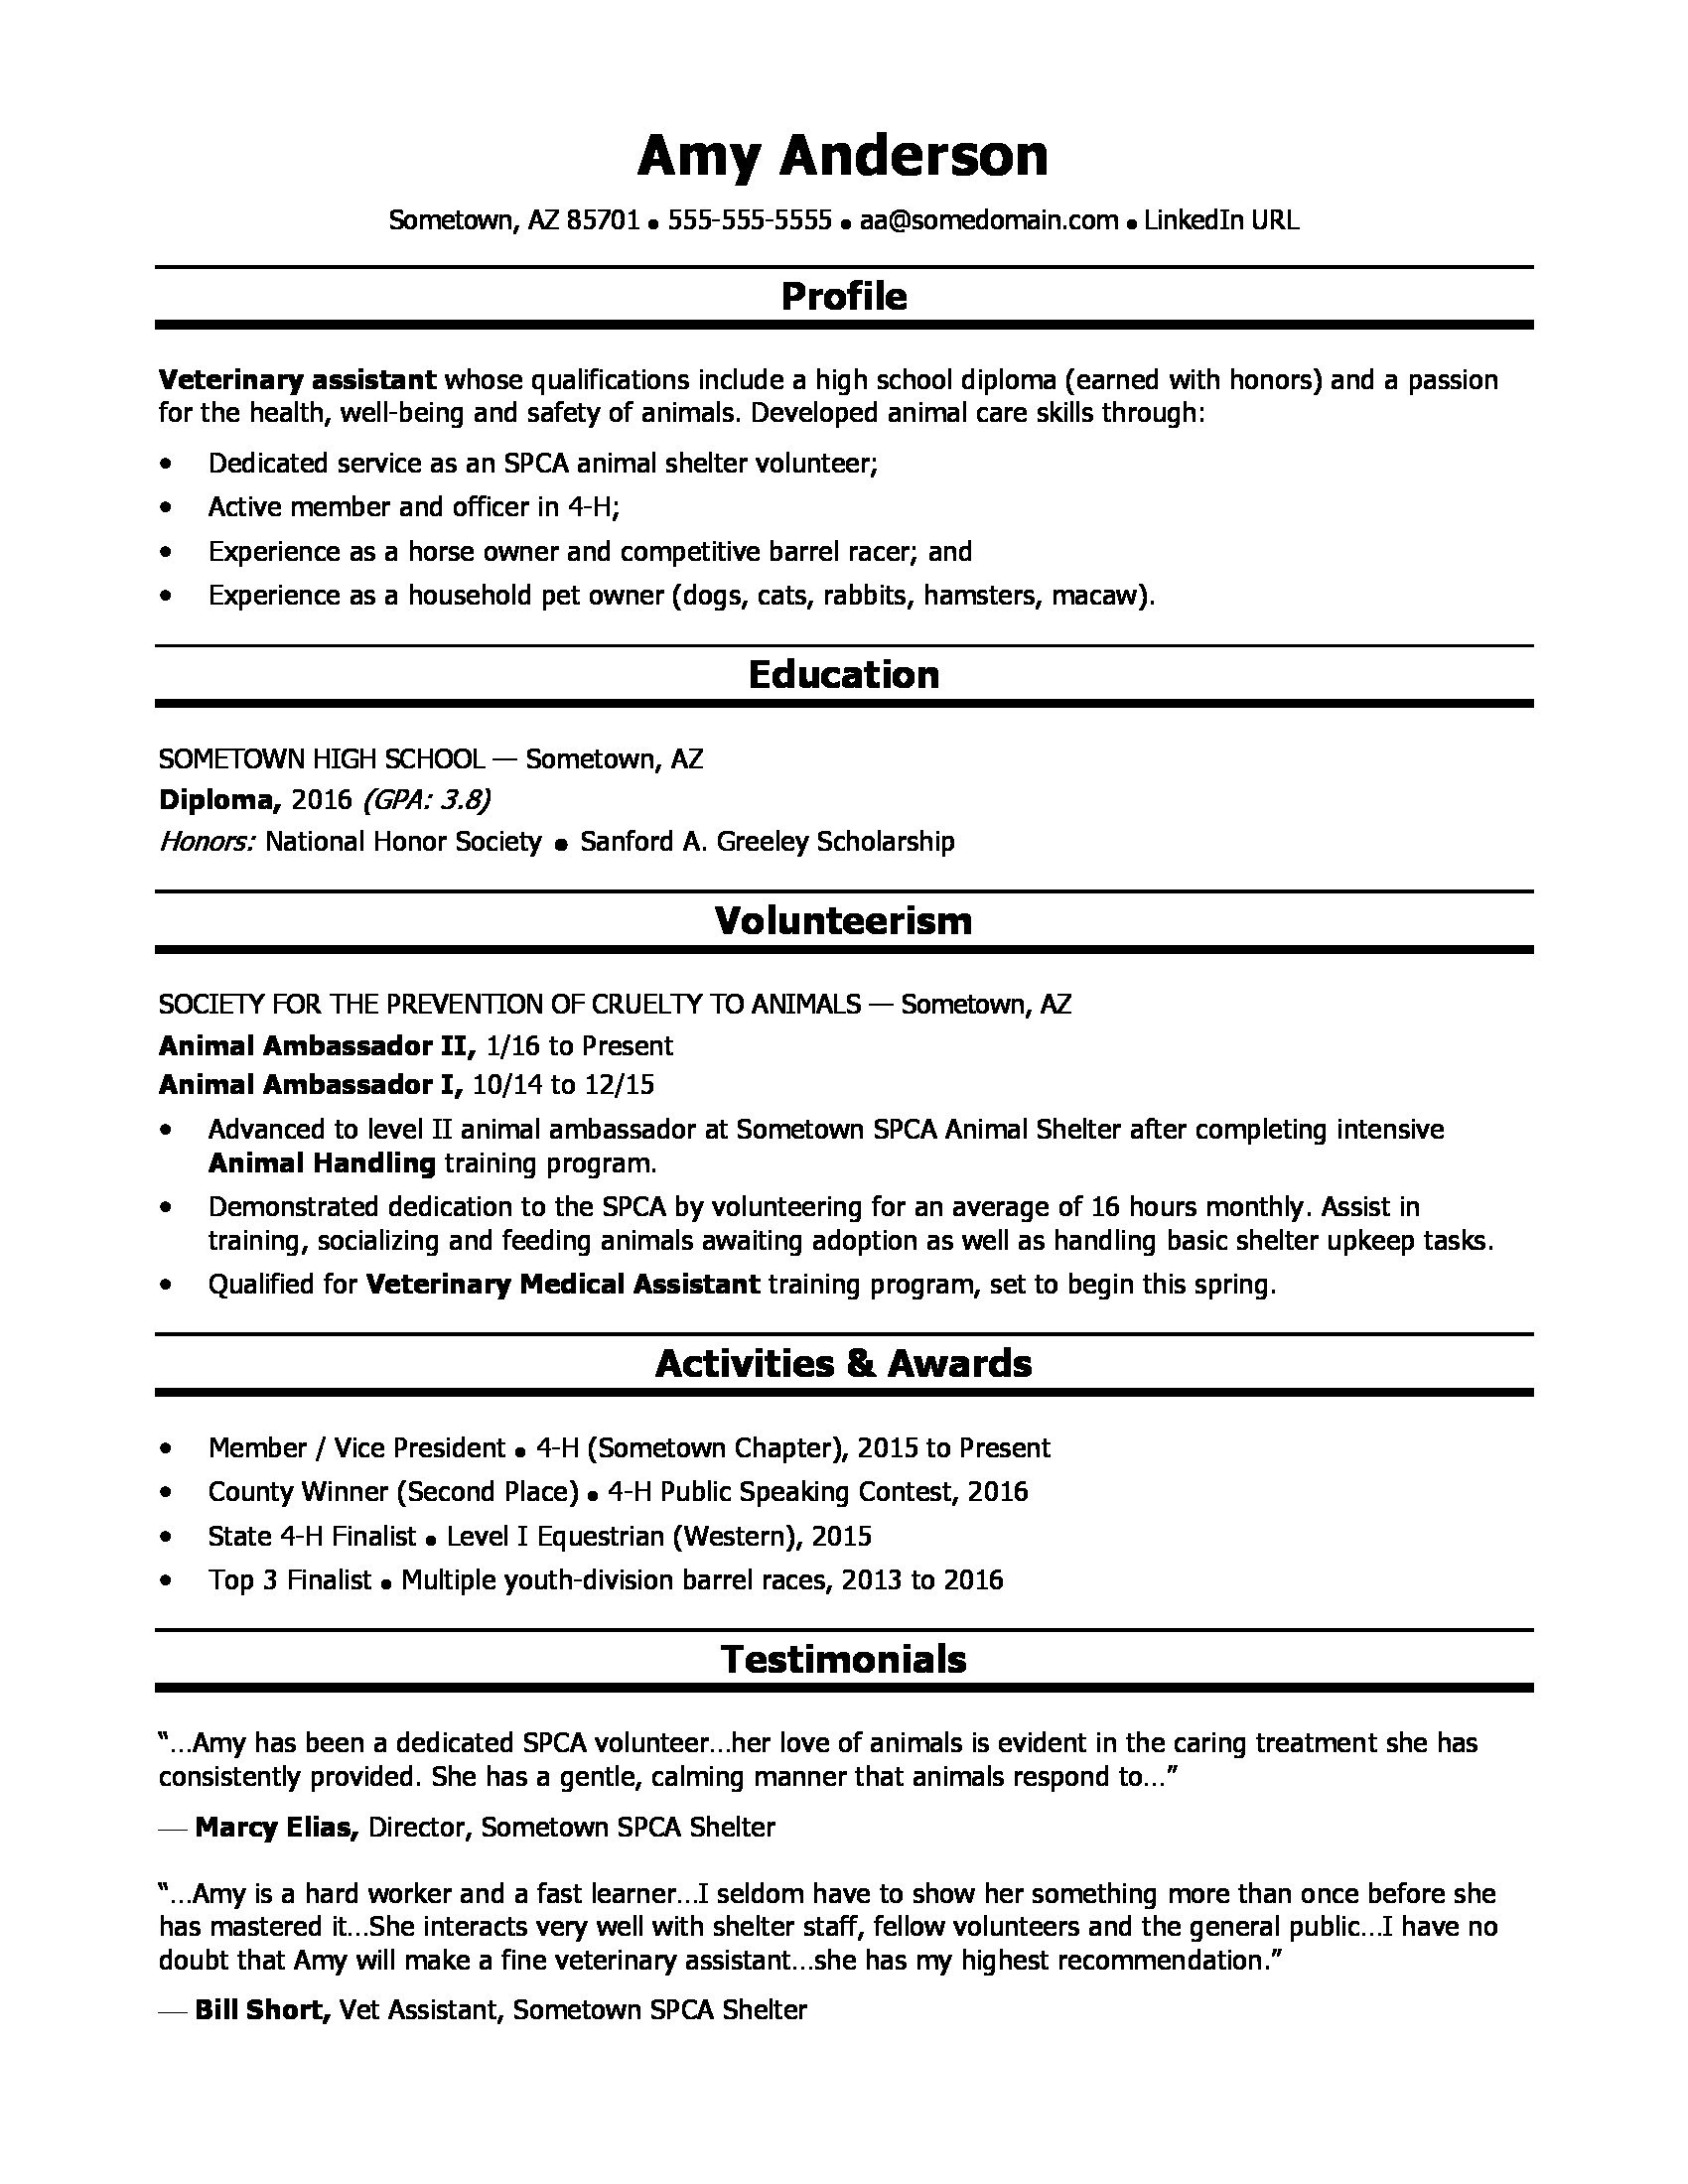 Academic Resume Template for Grad School High School Grad Resume Sample Monster.com